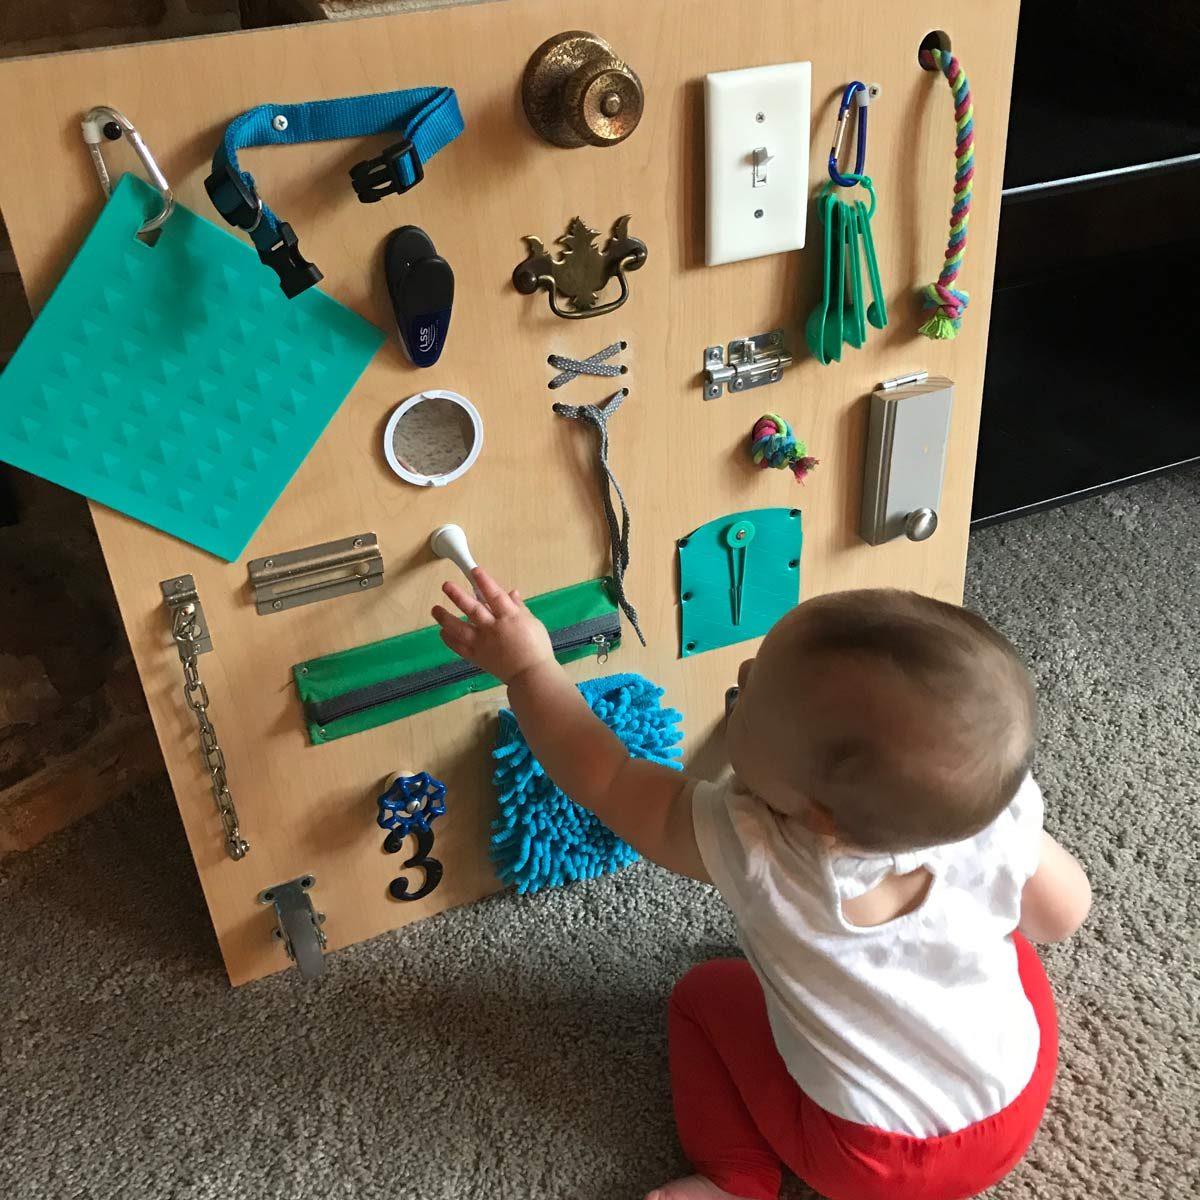 Toddler Busy Board, Wooden Sensory Board, Busy Board Montessori 2 Year Old,  Montessori Activity Board, Toddler Learning Board 